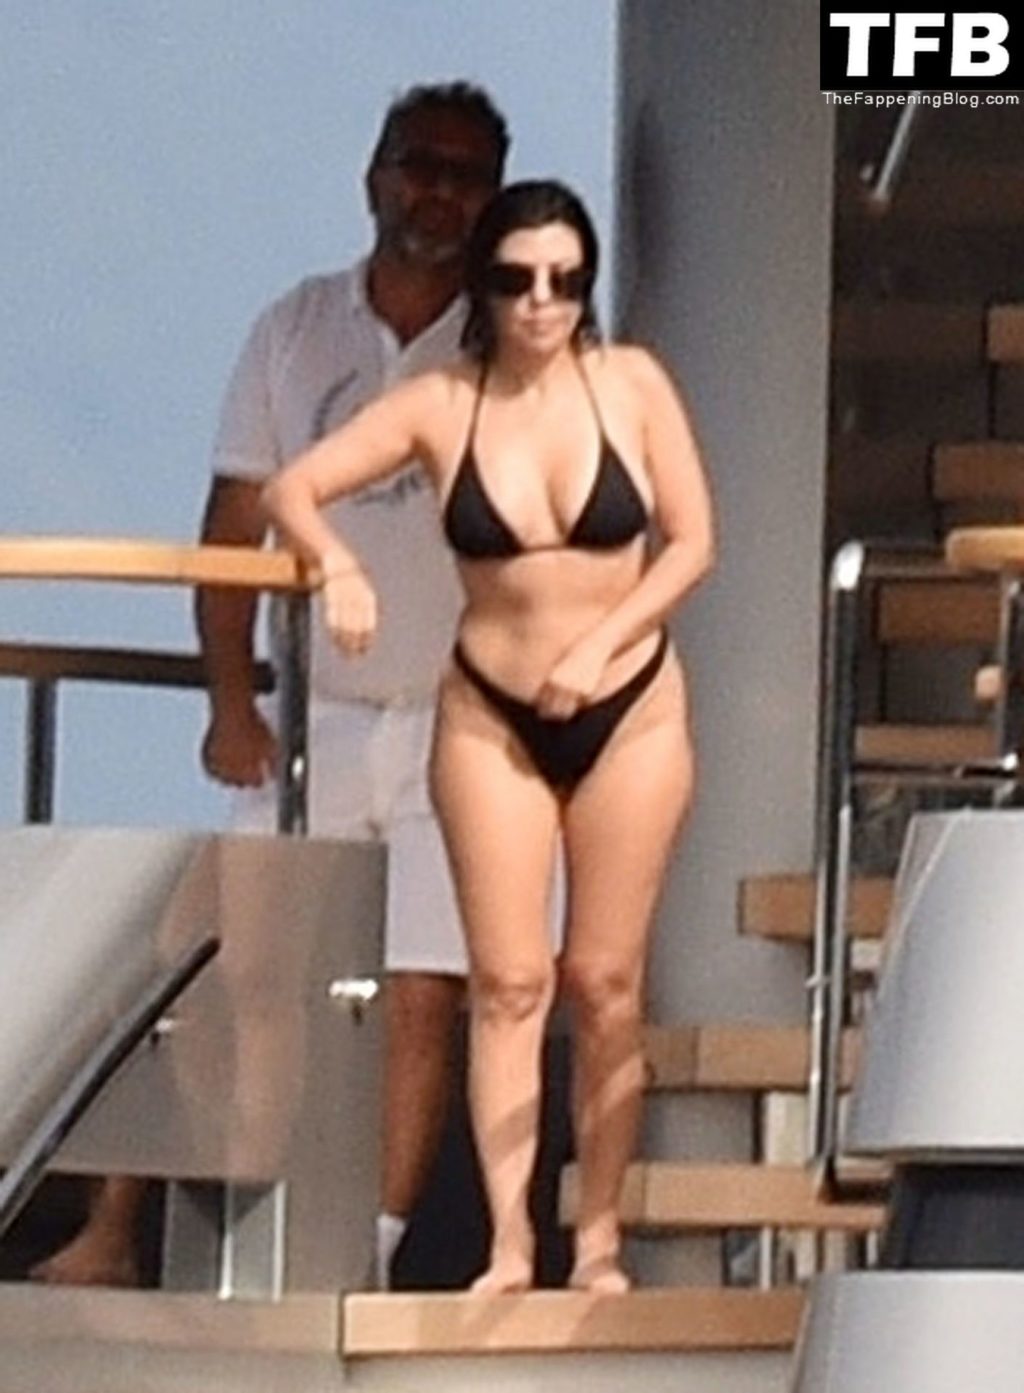 Kourtney Kardashian Sexy The Fappening Blog 5 1 1024x1393 - Kourtney Kardashian Shows Off Her Toned Bikini Body While Enjoying Some Quality Time with Travis Barker (48 Photos)